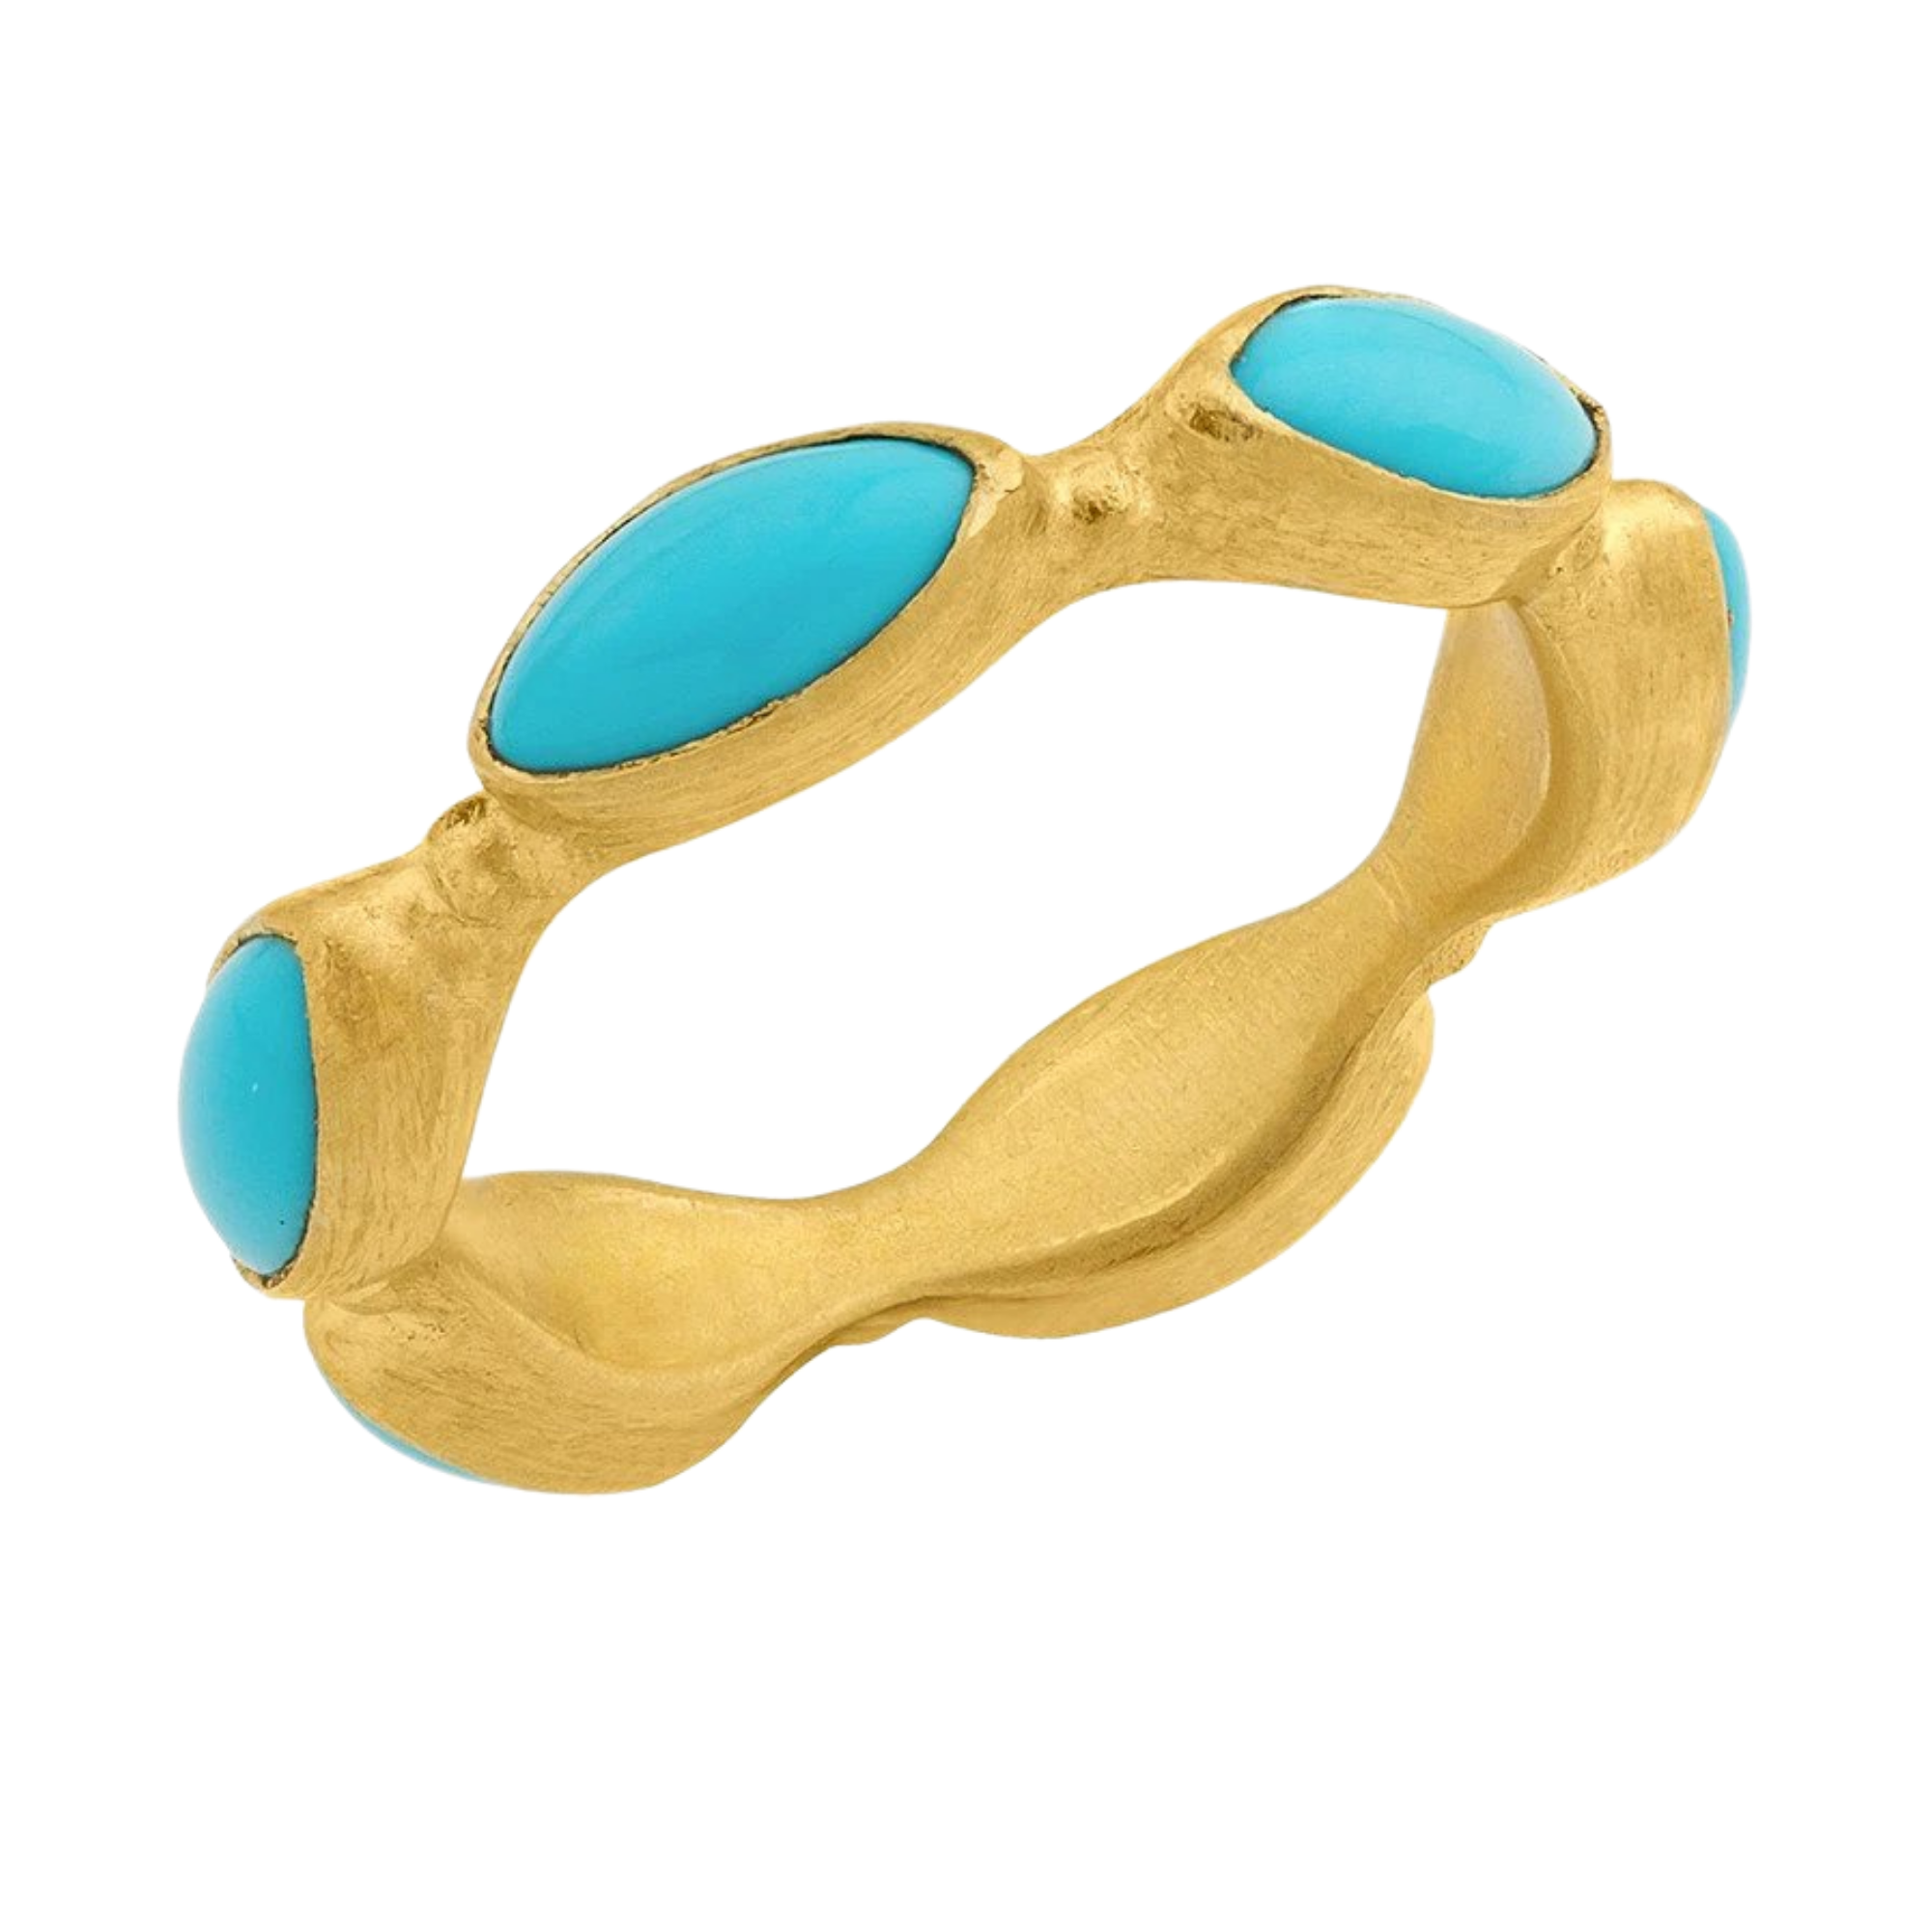 Lika Behar Sleeping Beauty Turquoise Ring, $1,950